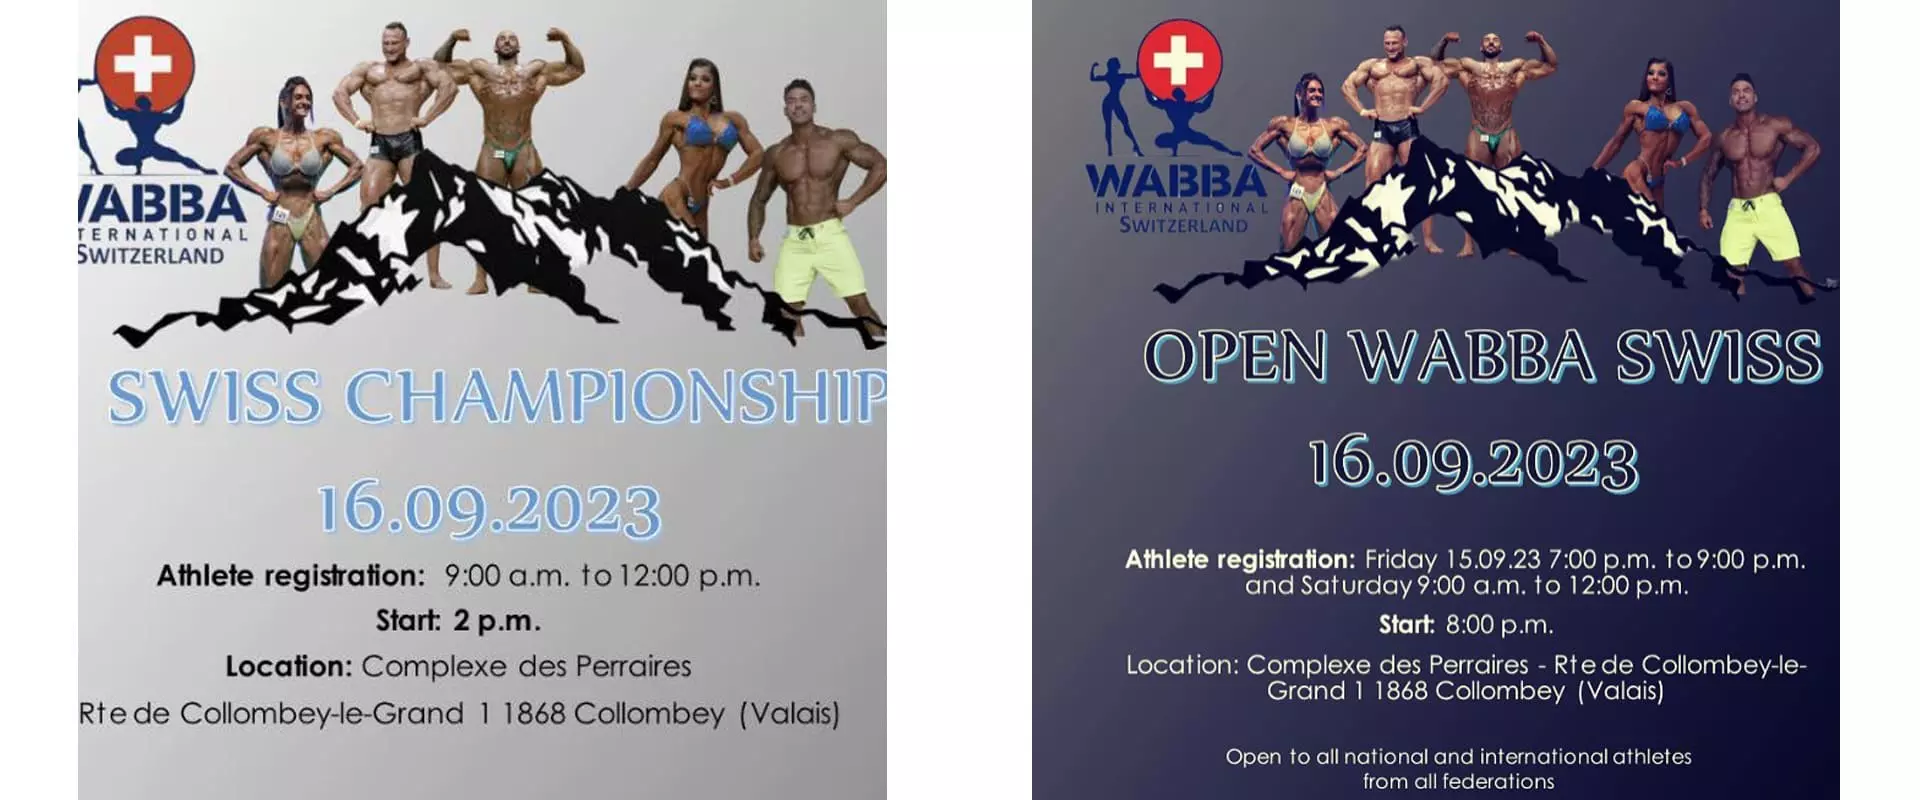 Swiss Championship & Open Wabba Swiss 2023